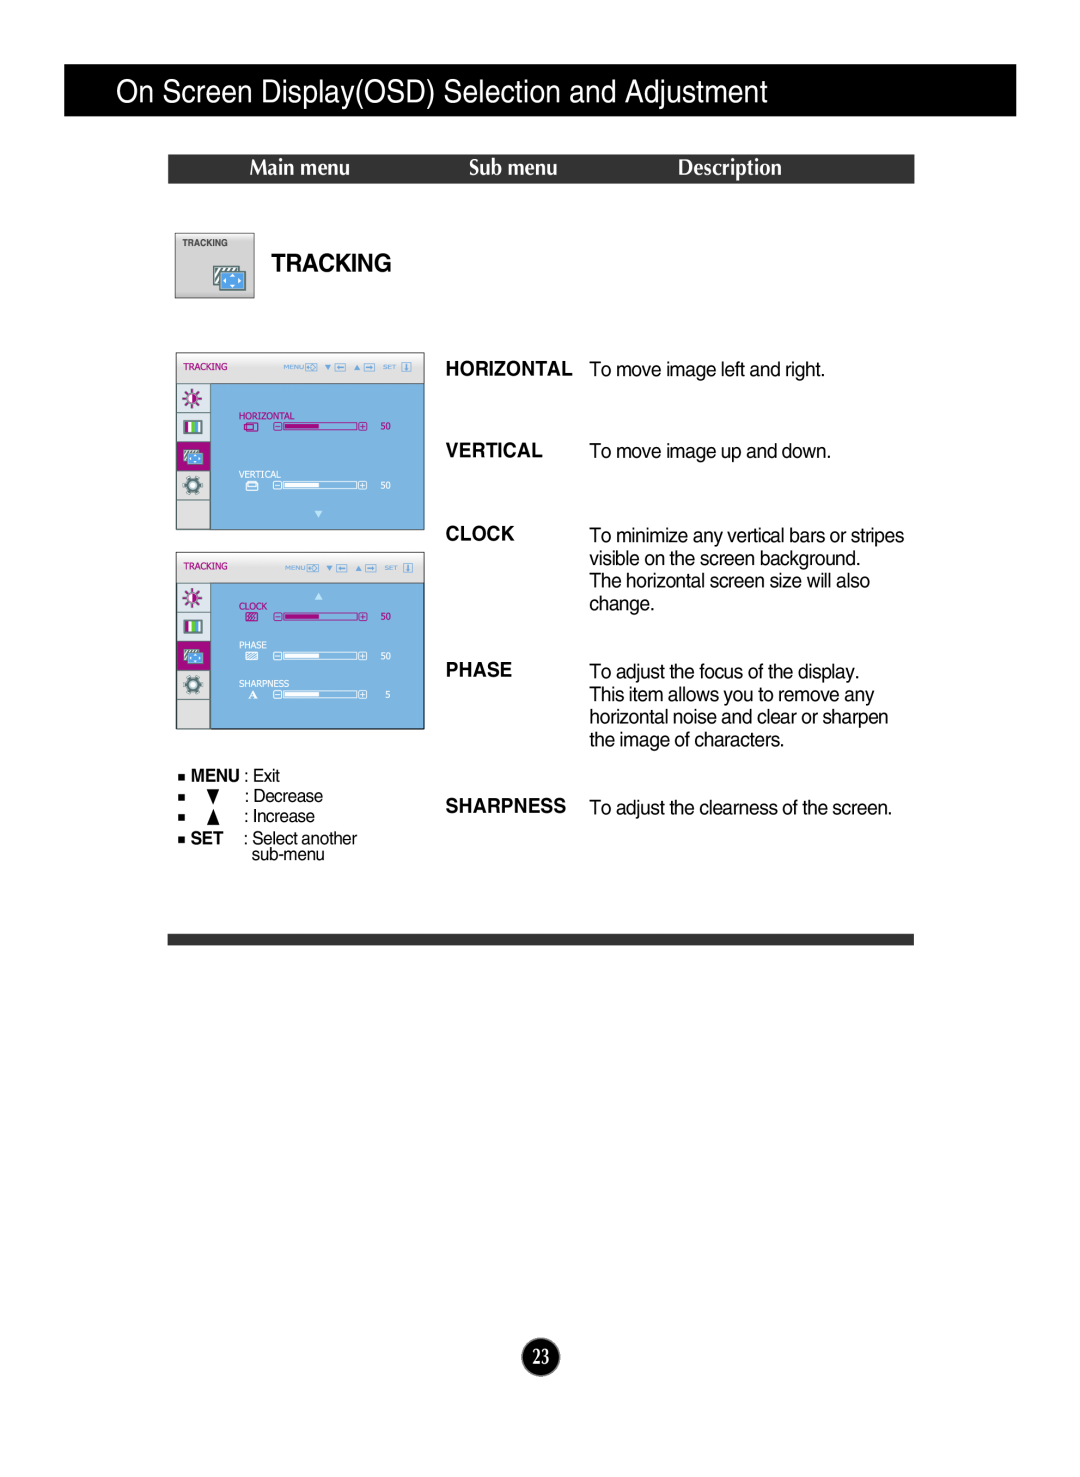 LG Electronics W2286L Tracking, On Screen DisplayOSD Selection and Adjustment, Main menu, Sub menu, Description, Sharpness 